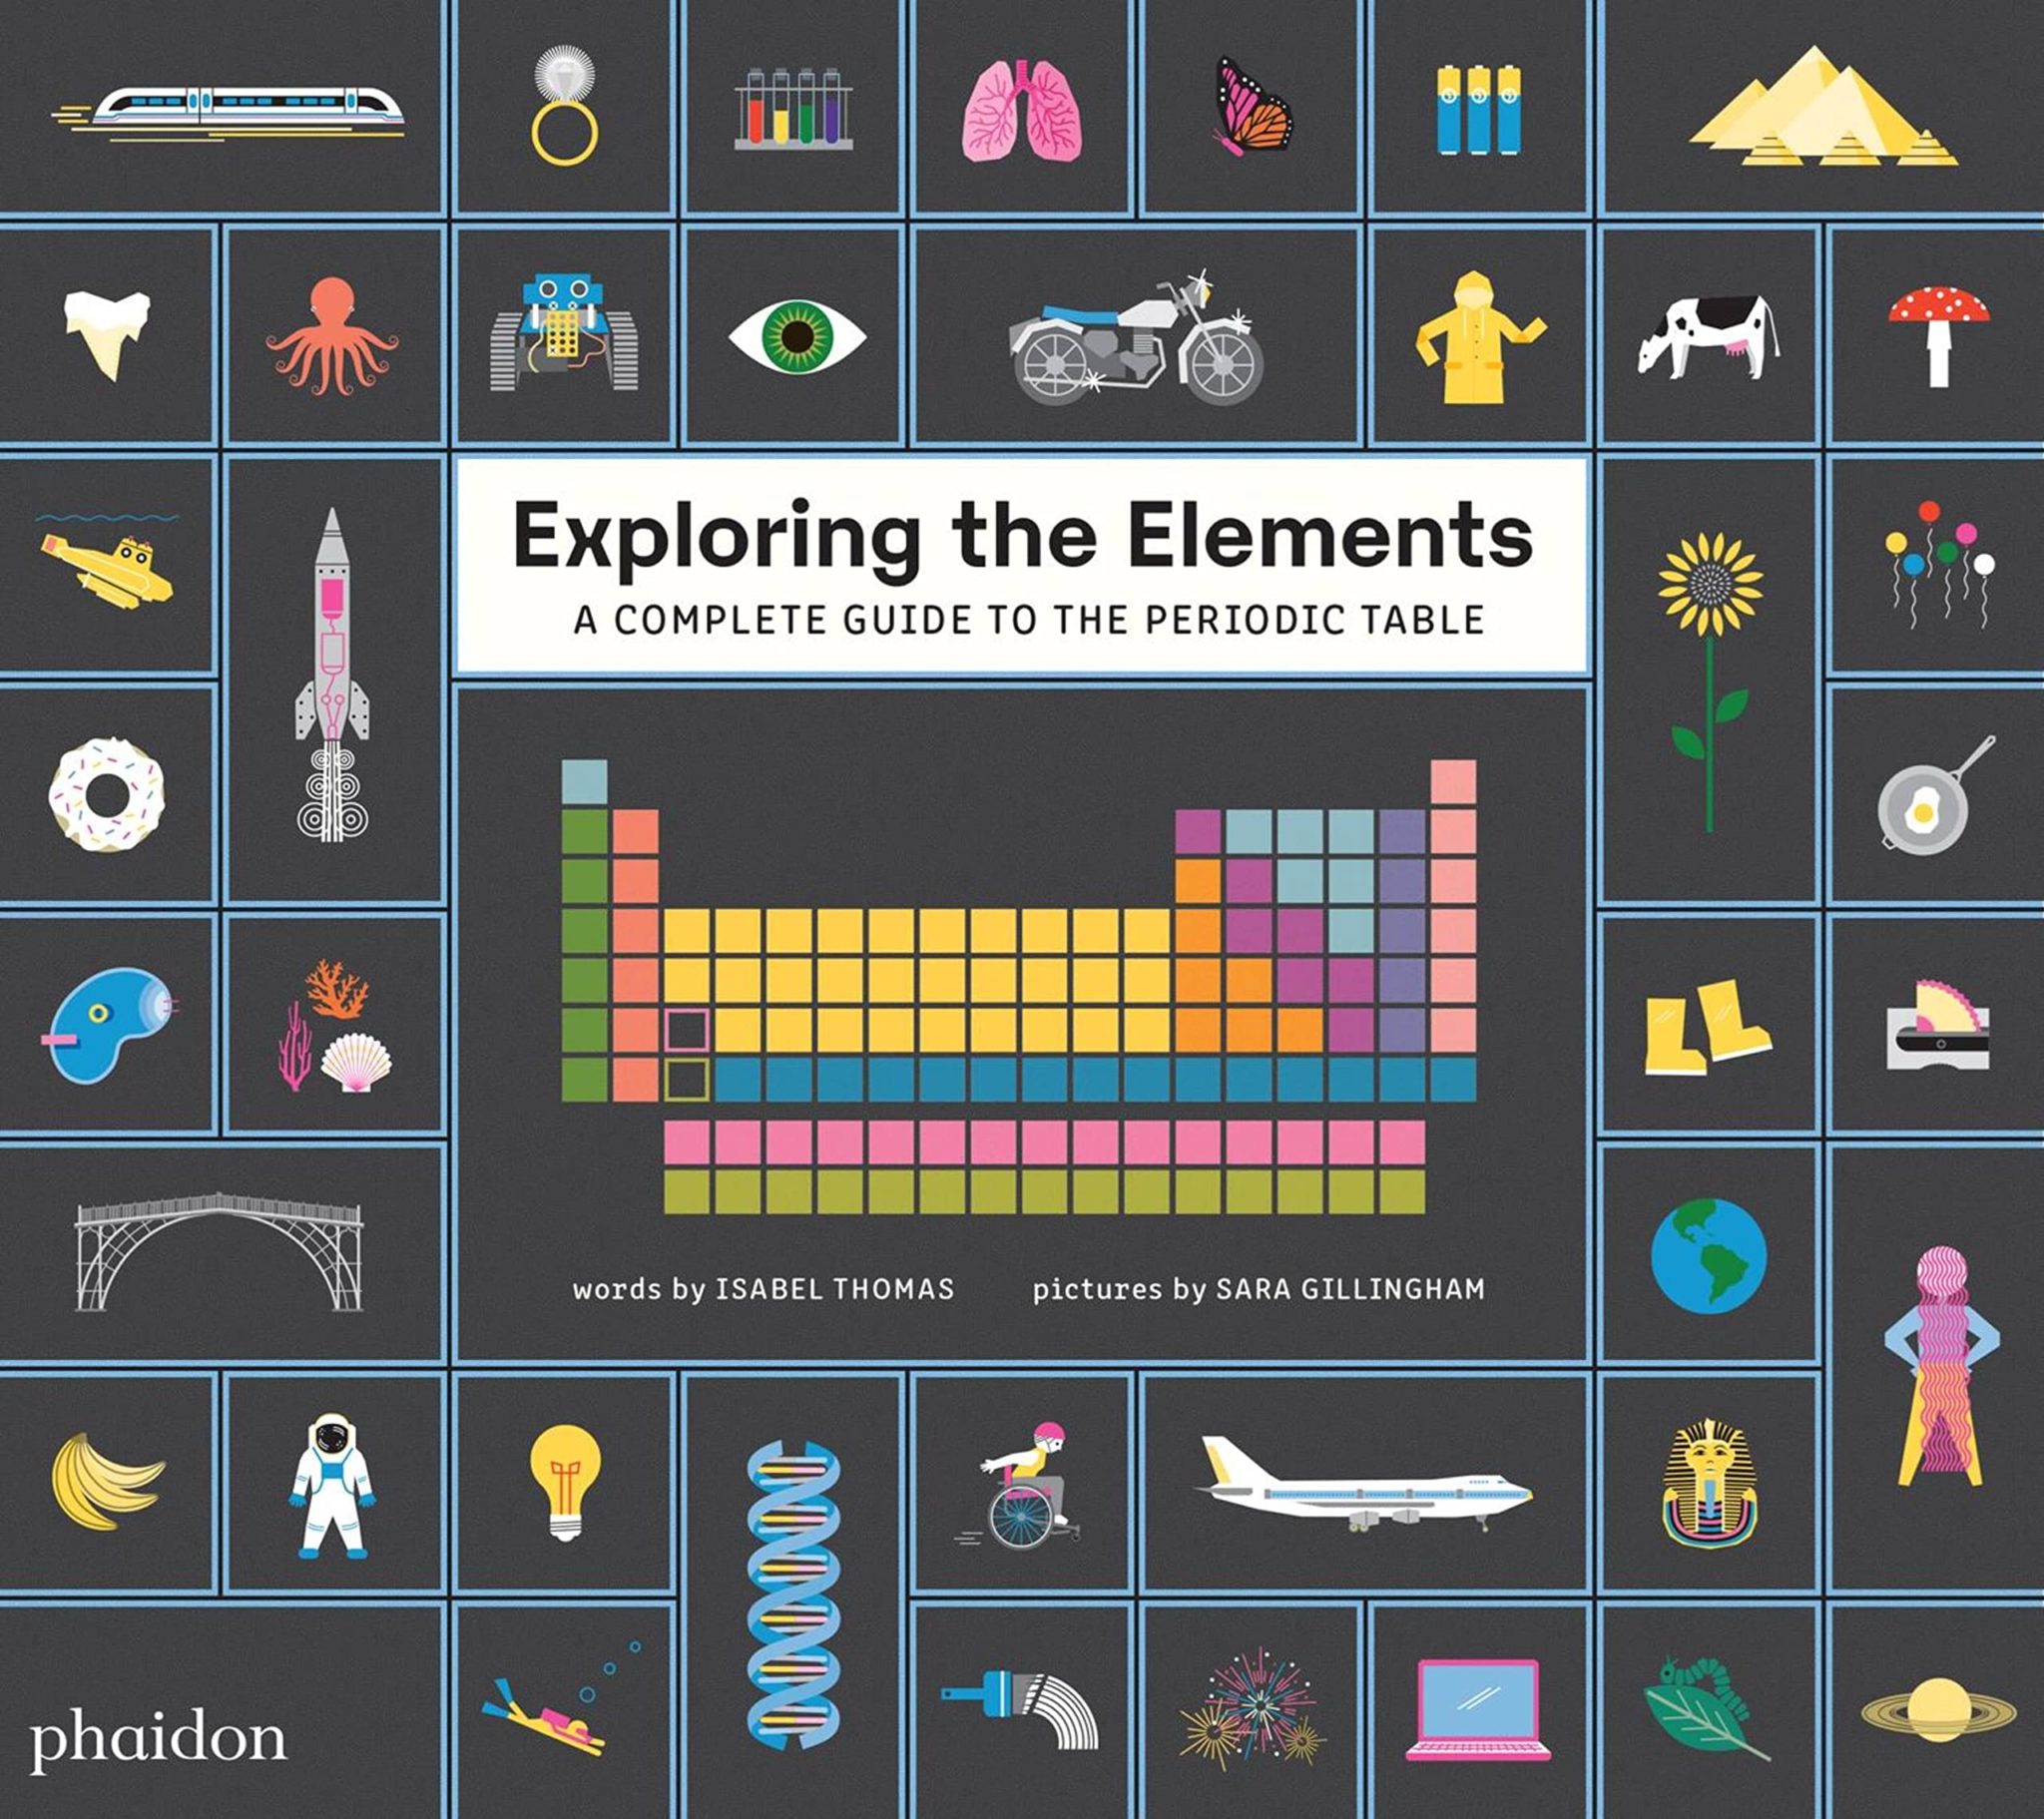 Elements книга. The elements authors игра. Book elements.